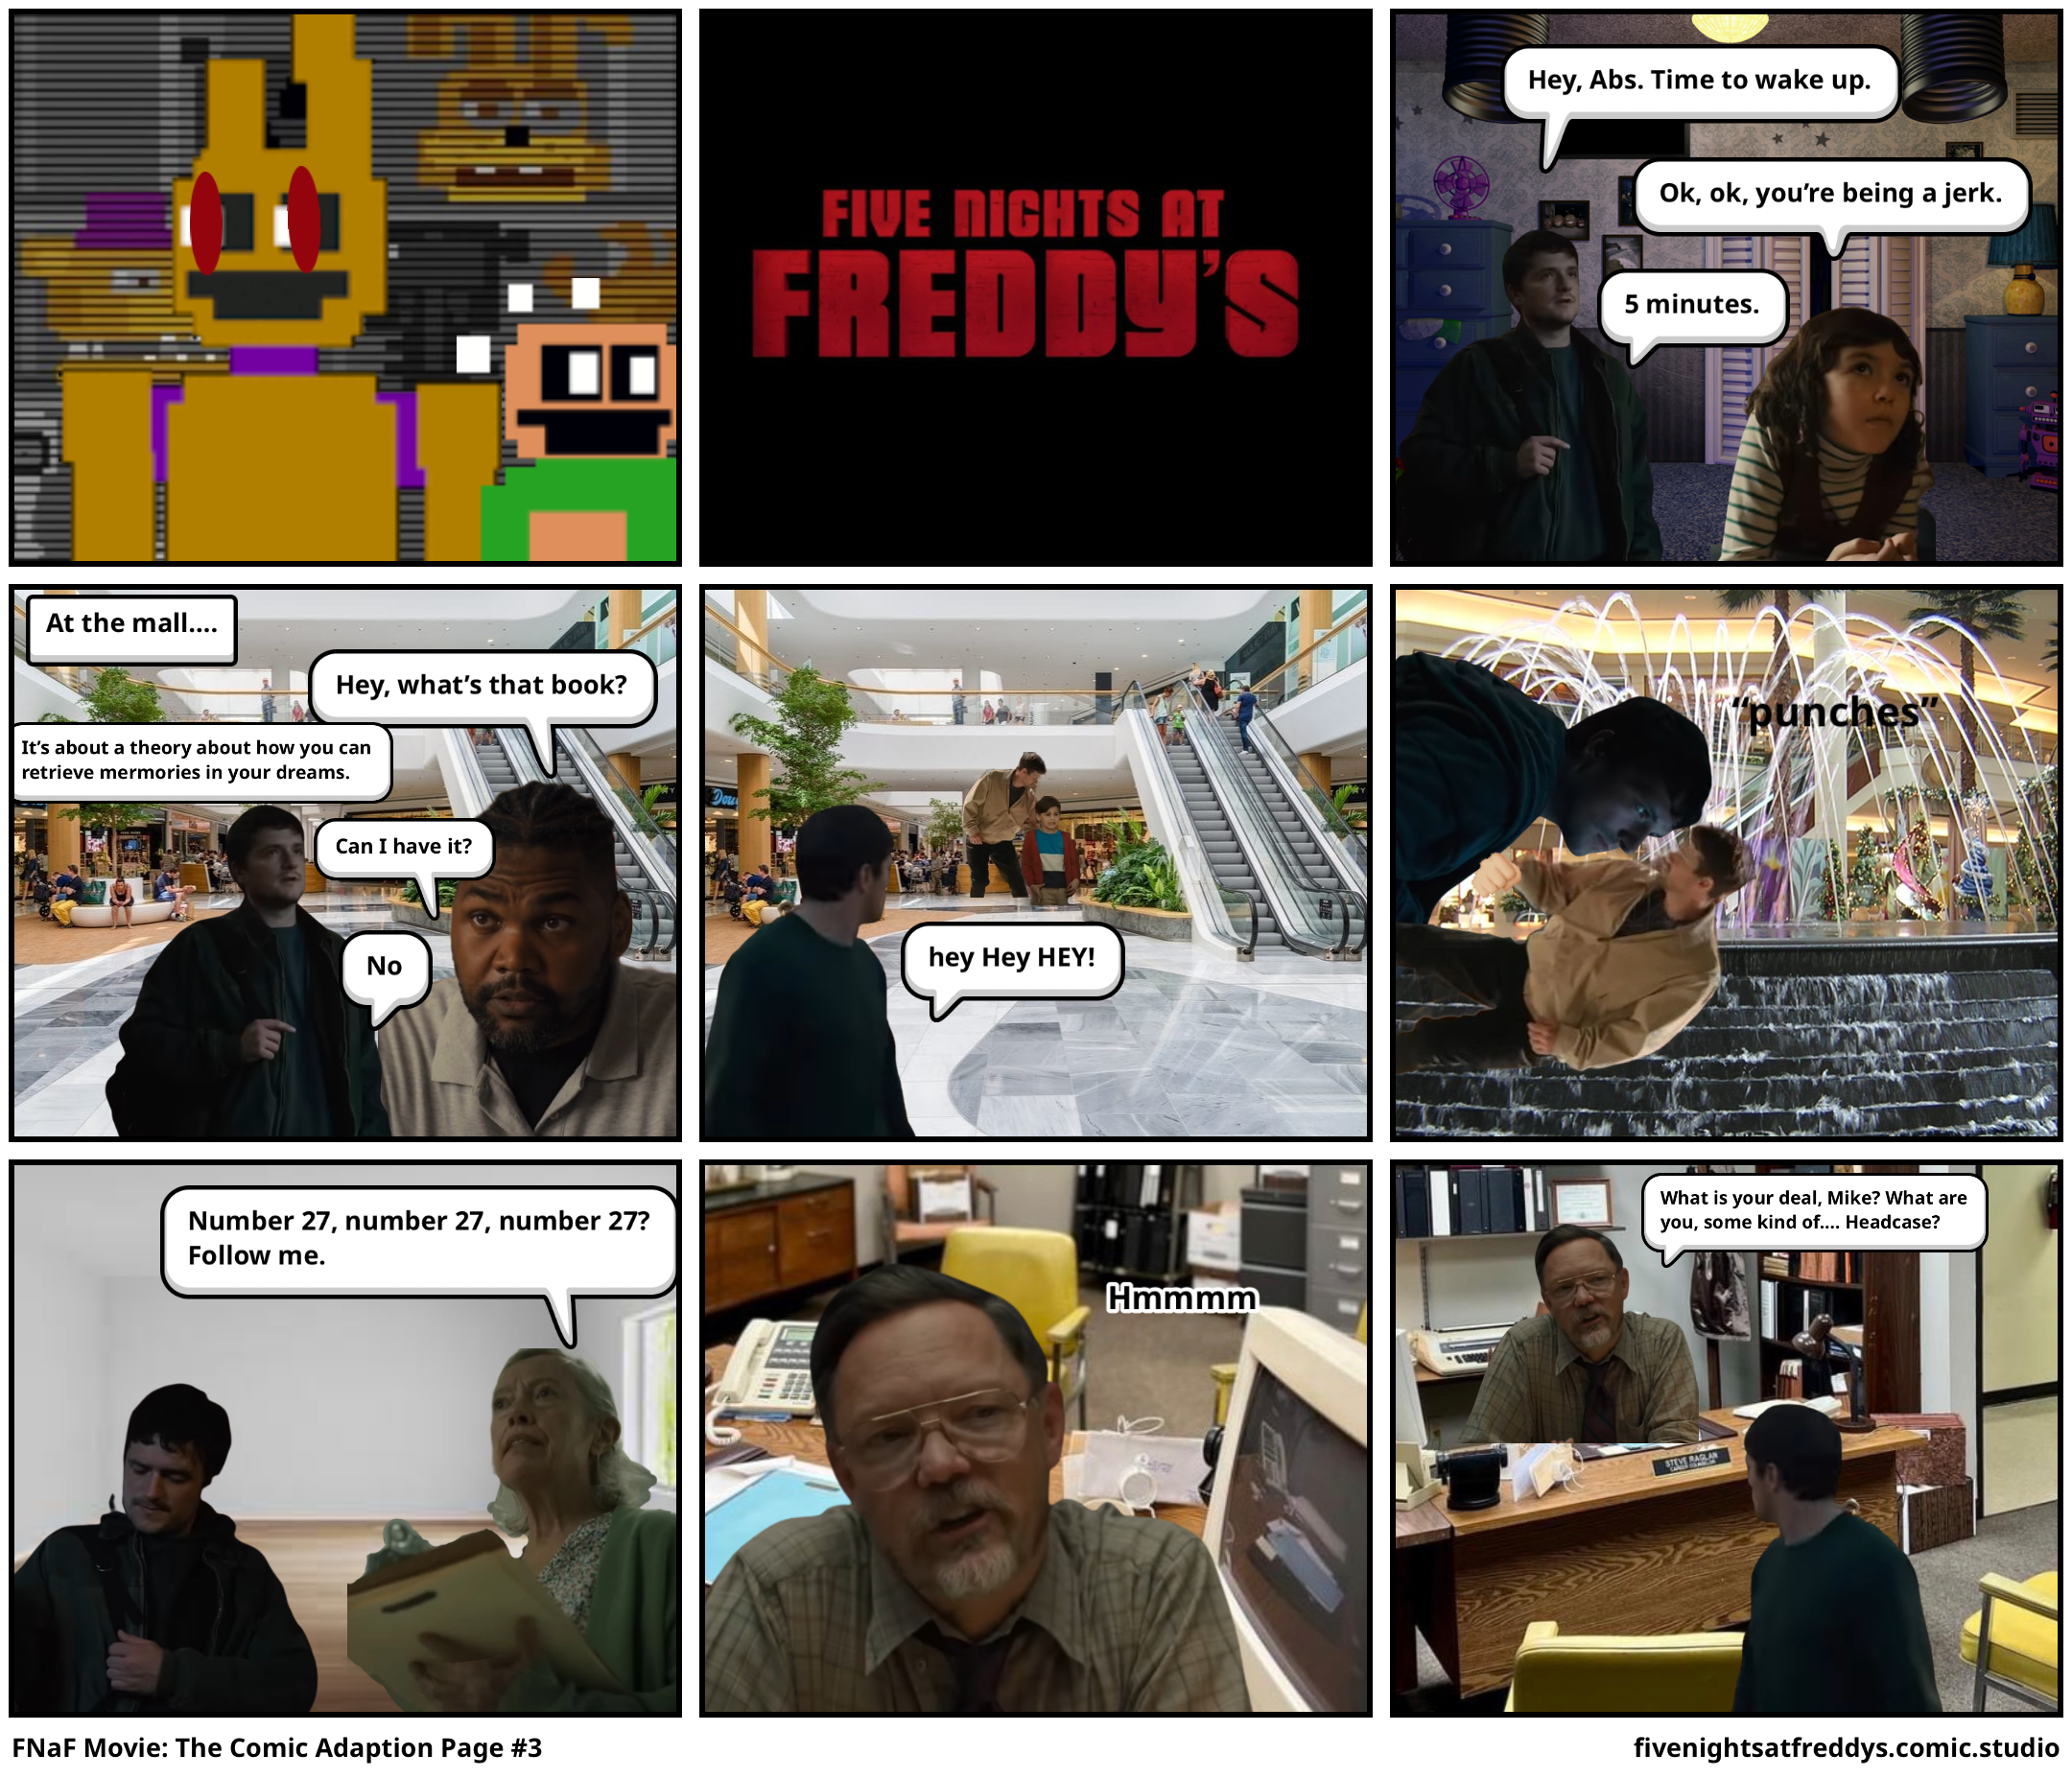 FNaF Movie: The Comic Adaption Page #3